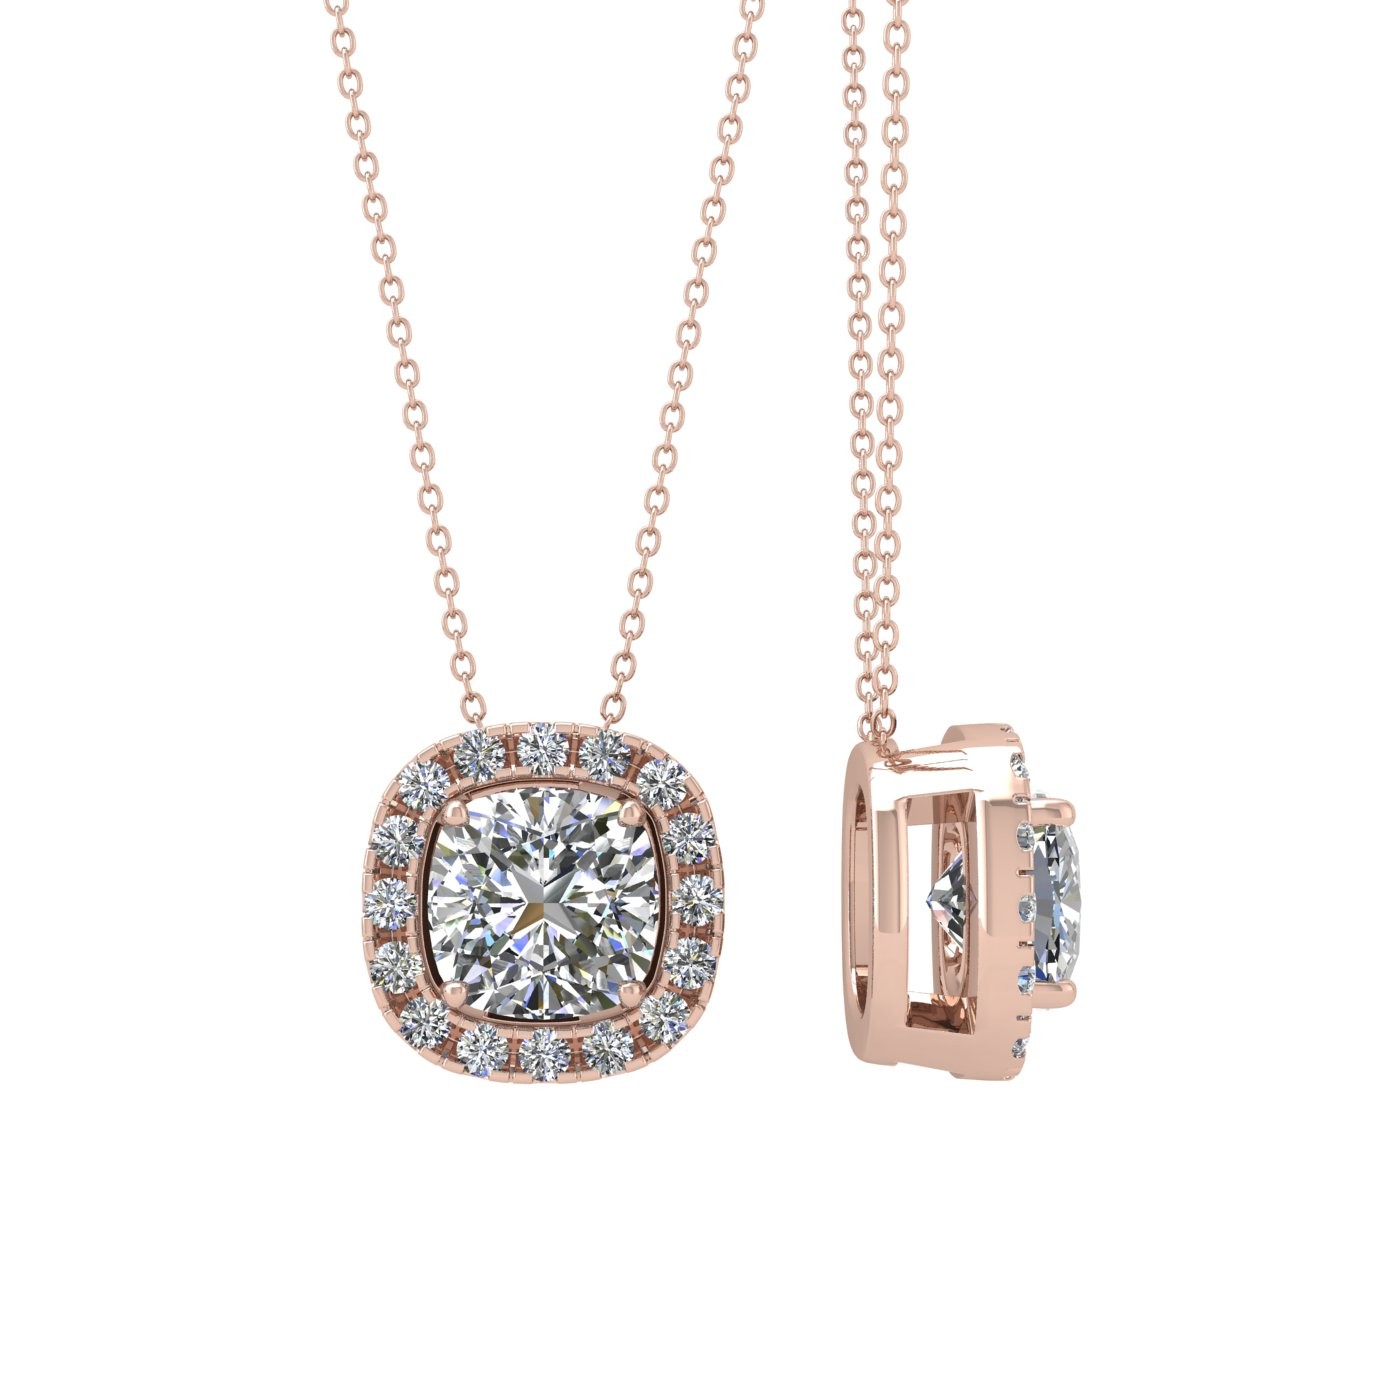 18k rose gold  1,2 ct 4 prongs cushion shape diamond pendant with diamond pavÉ set halo Photos & images